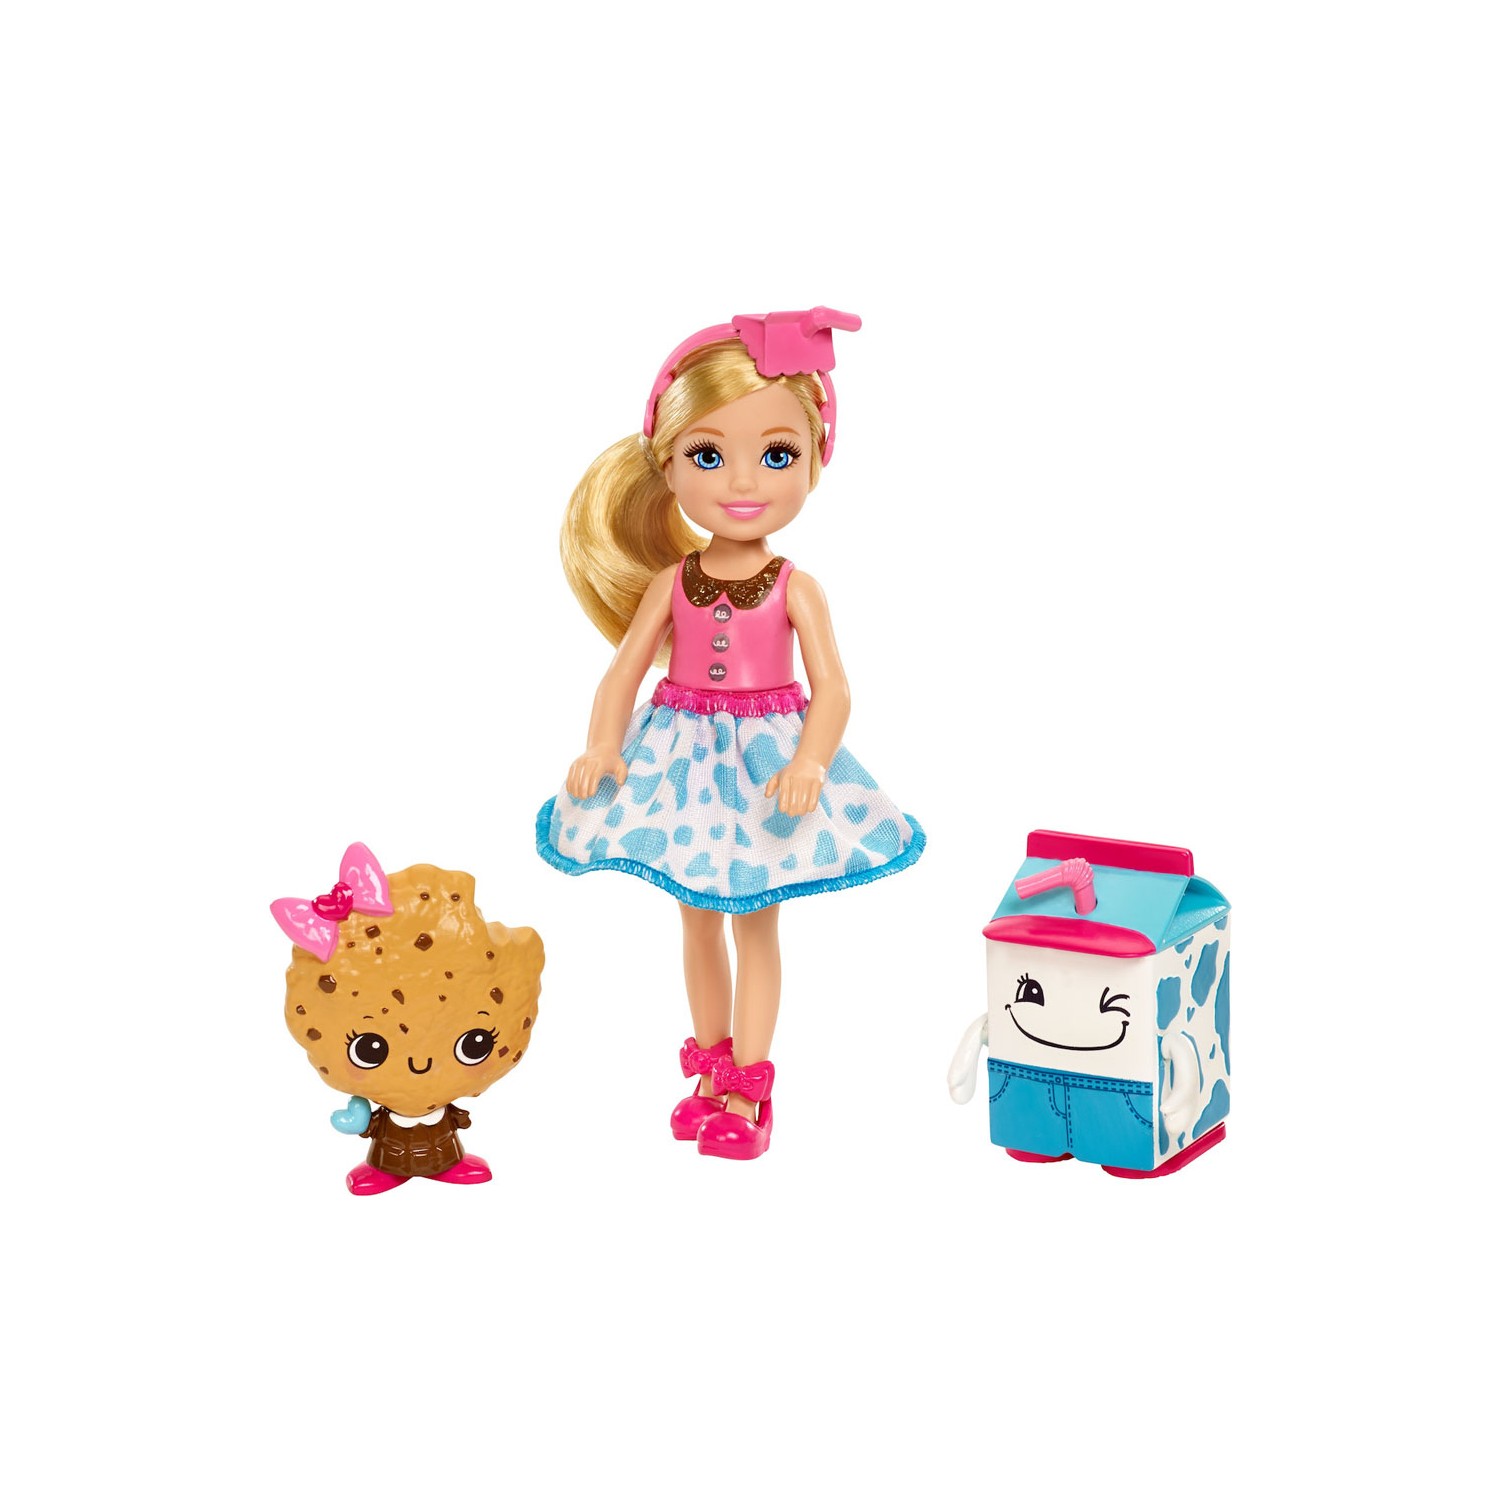 Кукла Barbie Dreamtopia Chelsea and its 2 Cute Friends Fdj11 барби мои друзья 2